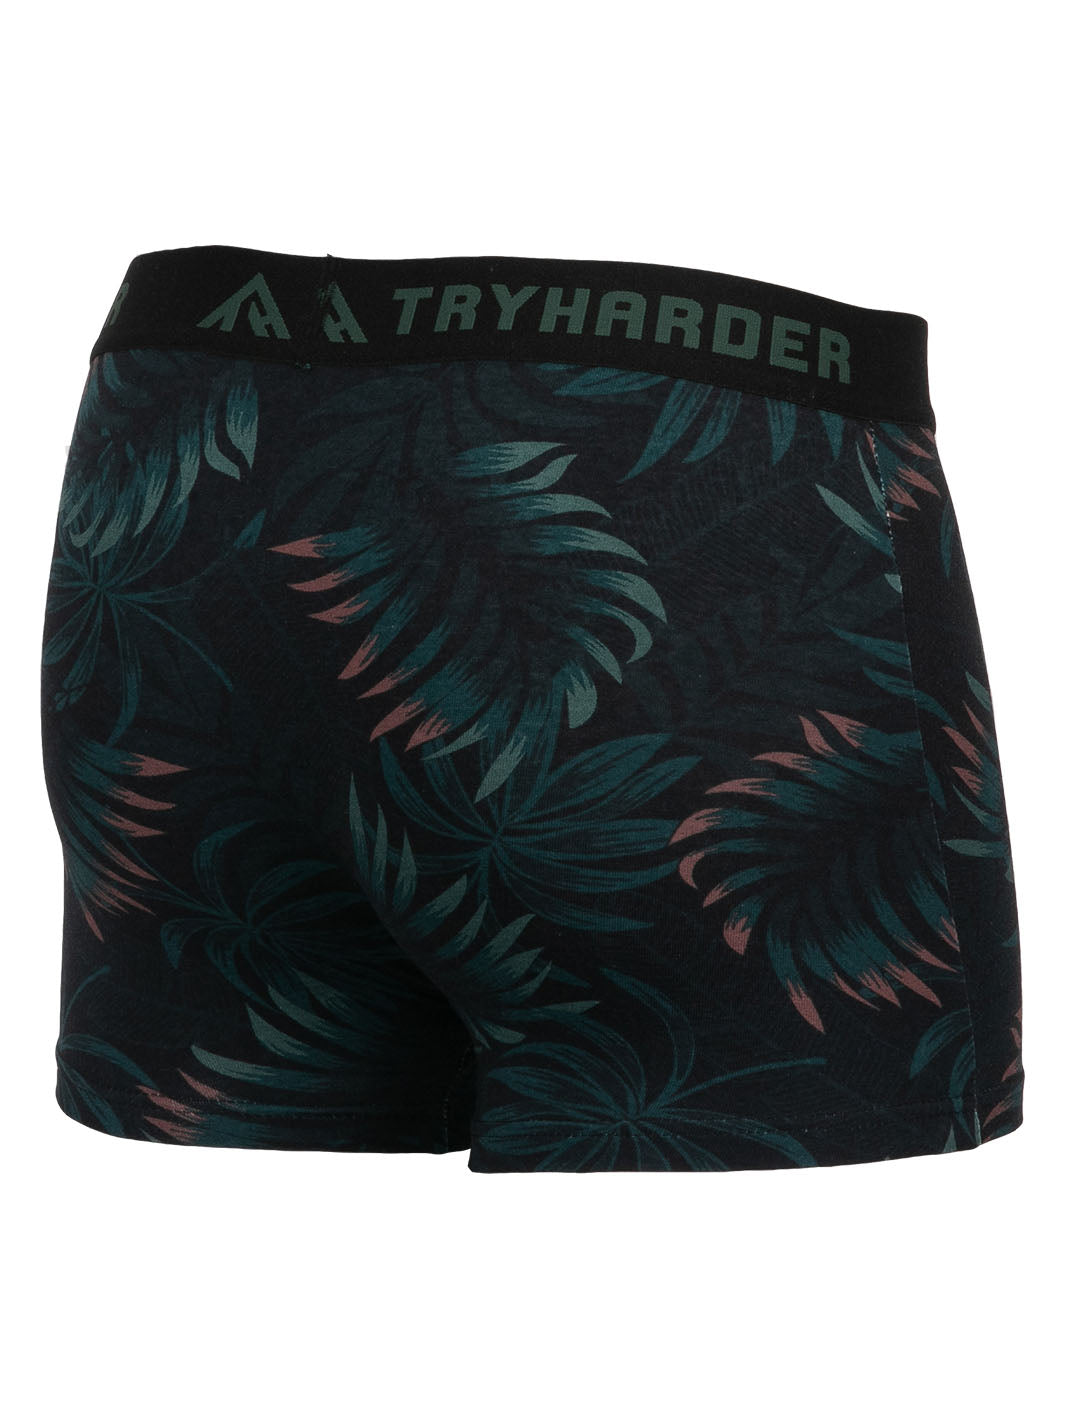 TRYHARDER - Boxer - Blätter 1 Pack